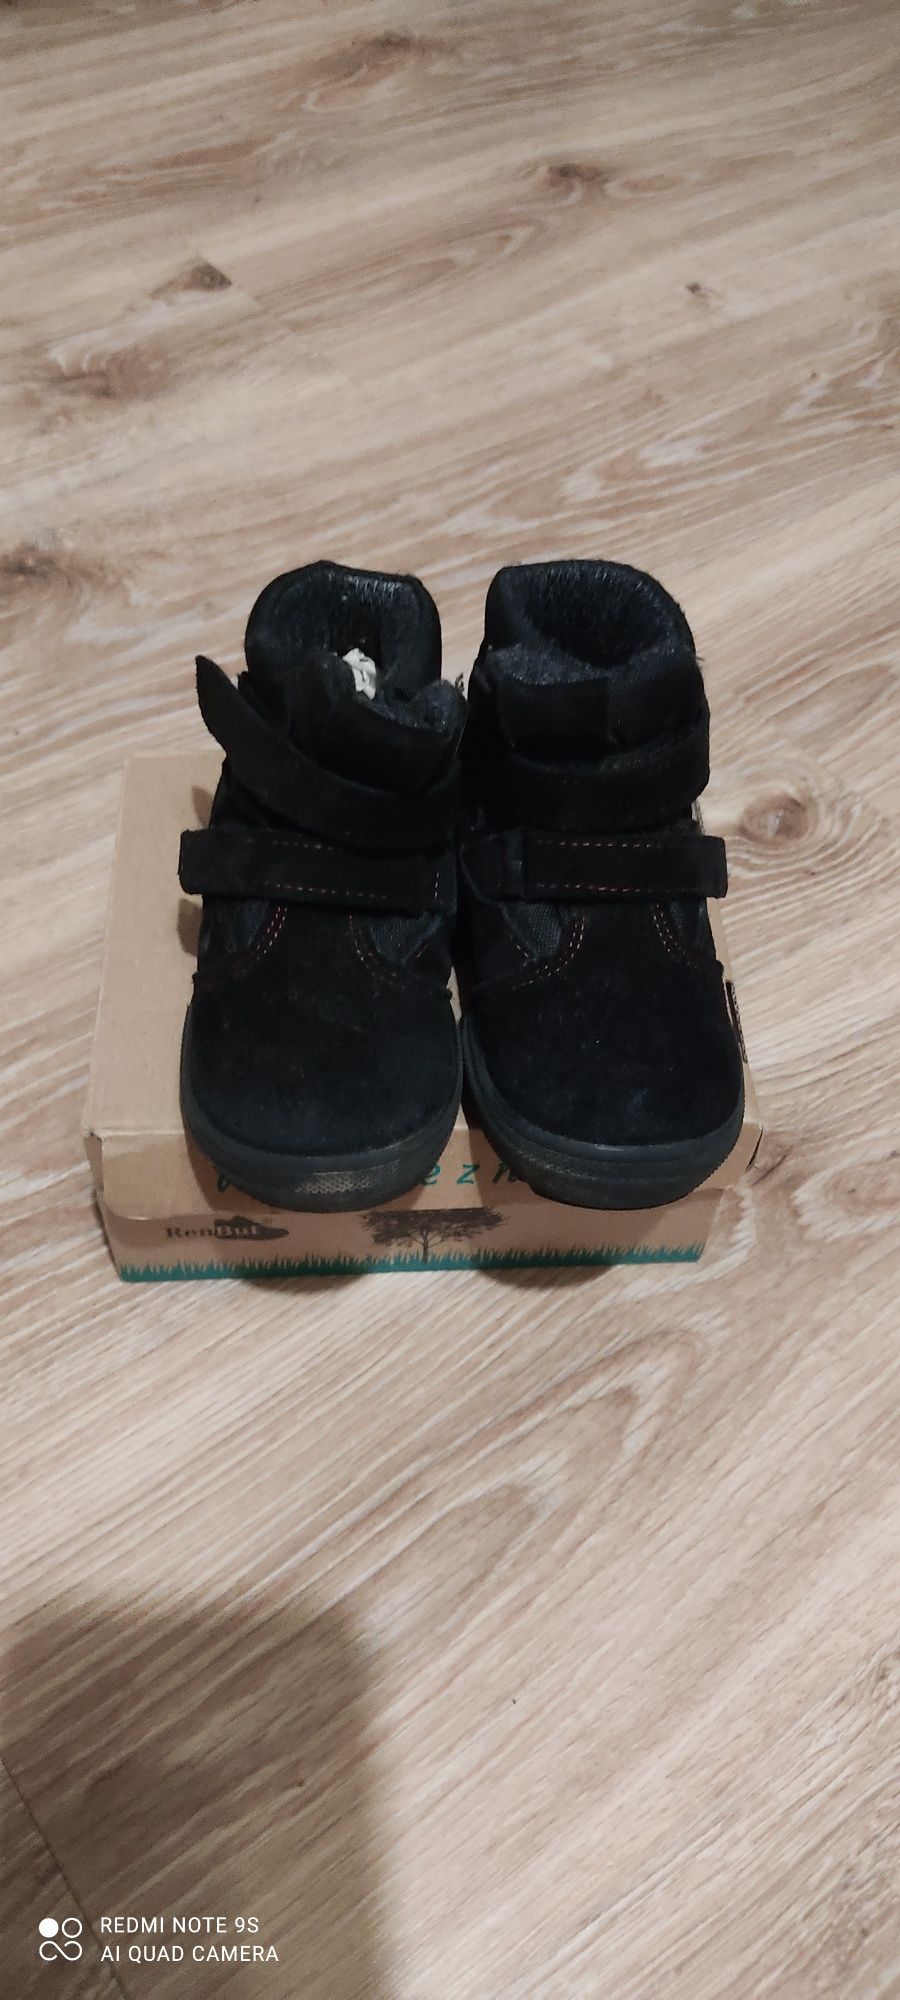 Buty zimowe Renbut Rentex w kolorze czarnym r. 24